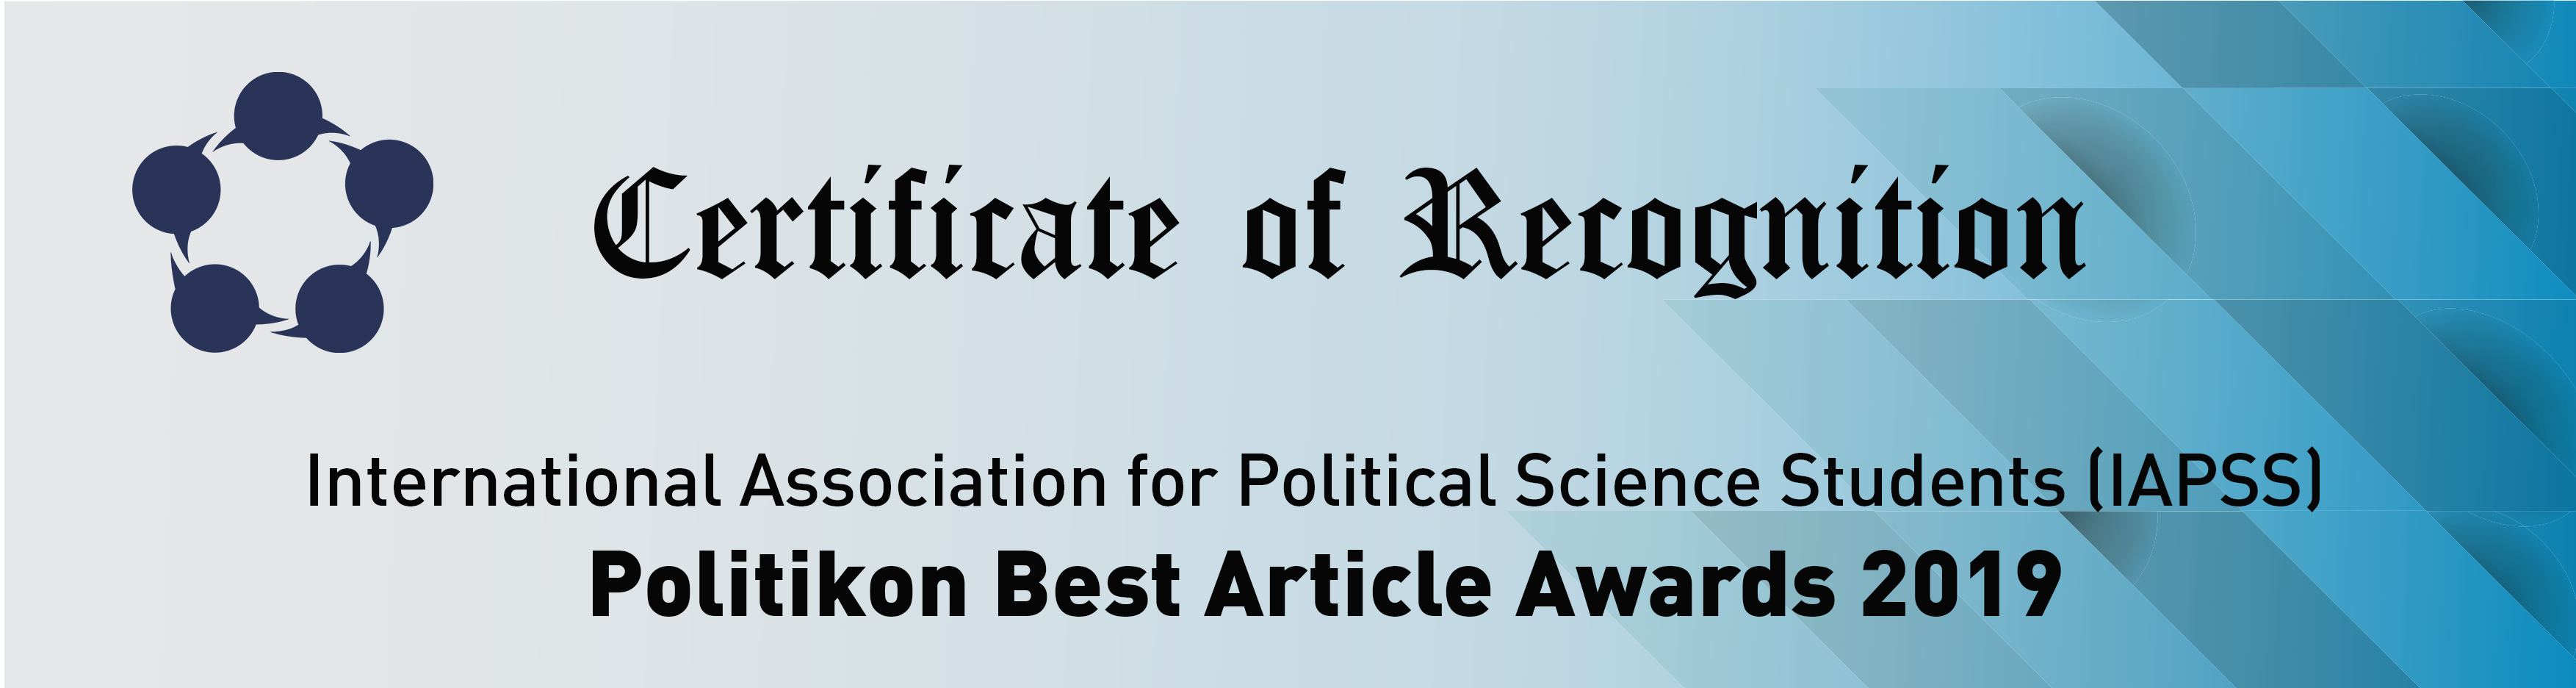 Politikon_Best_Article_Awards_2019.png